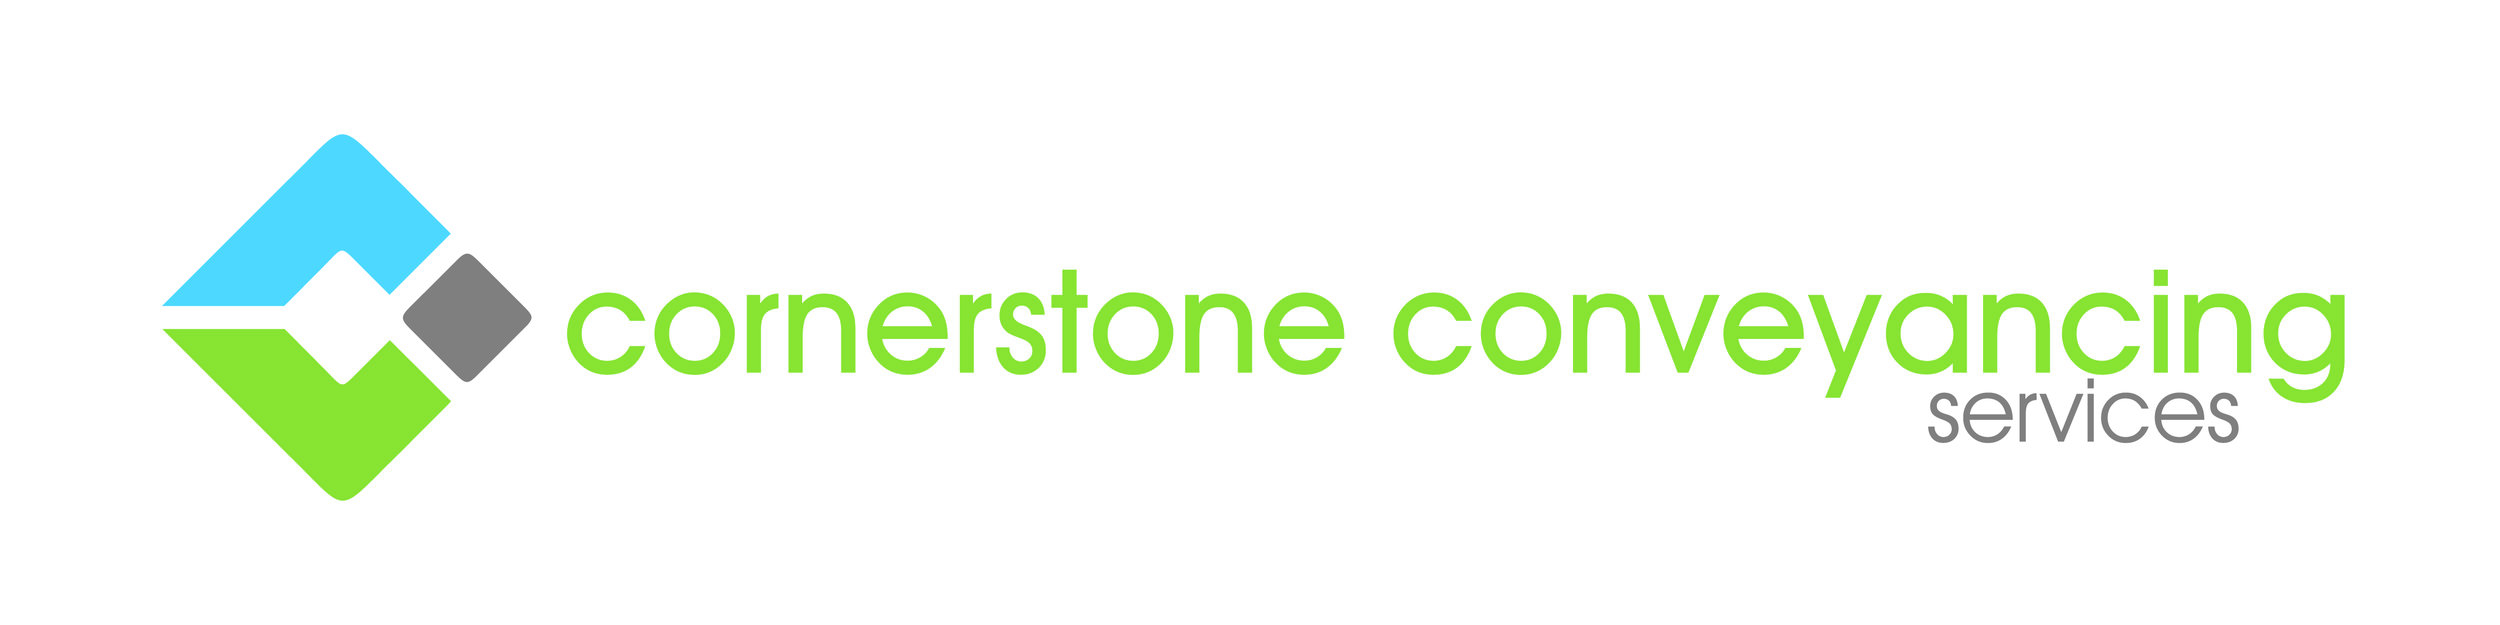 cornerstone logo white-02.jpg